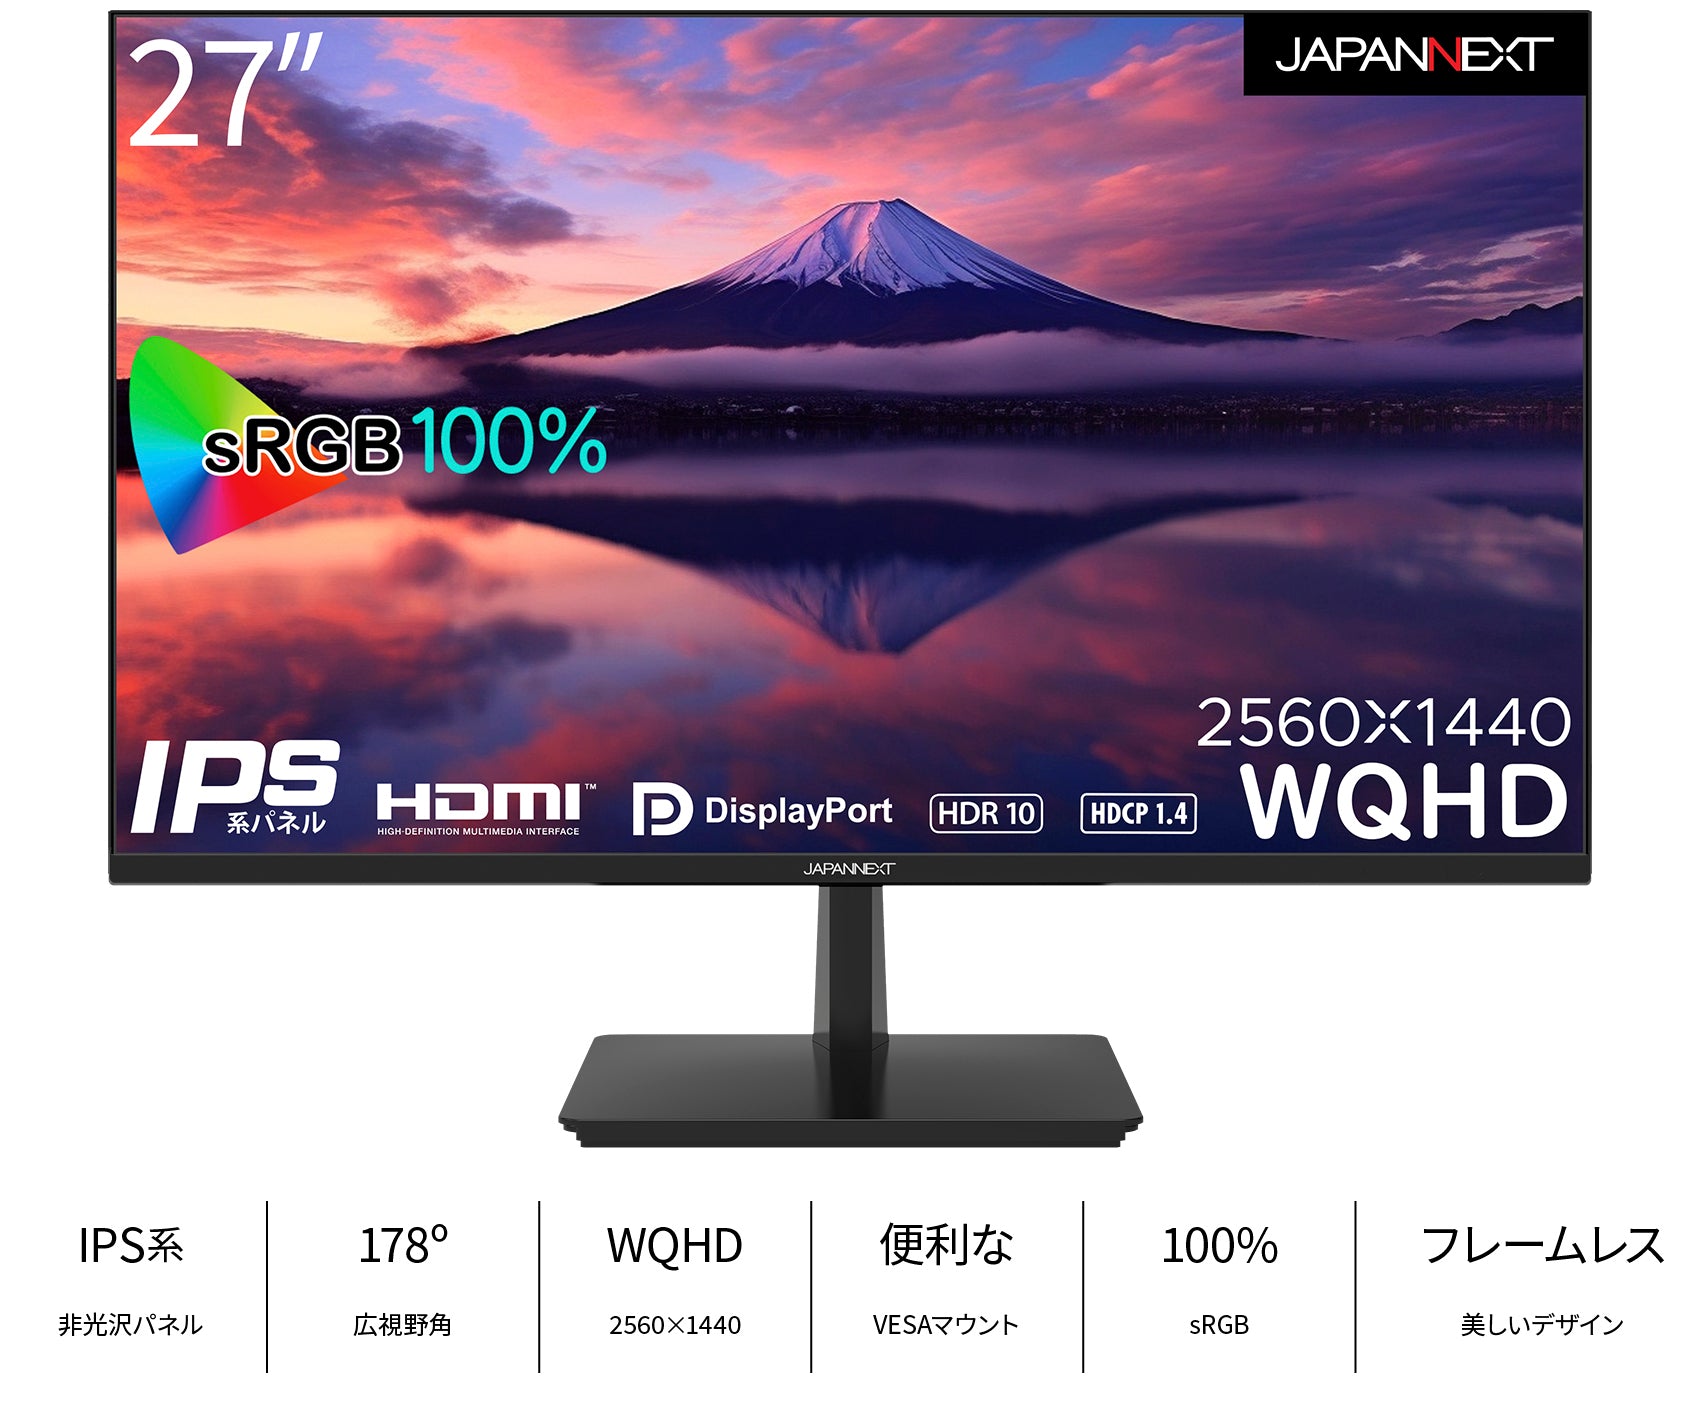 【Amazon.co.jp限定】JAPANNEXT 27インチ WQHD(2560 x 1440 